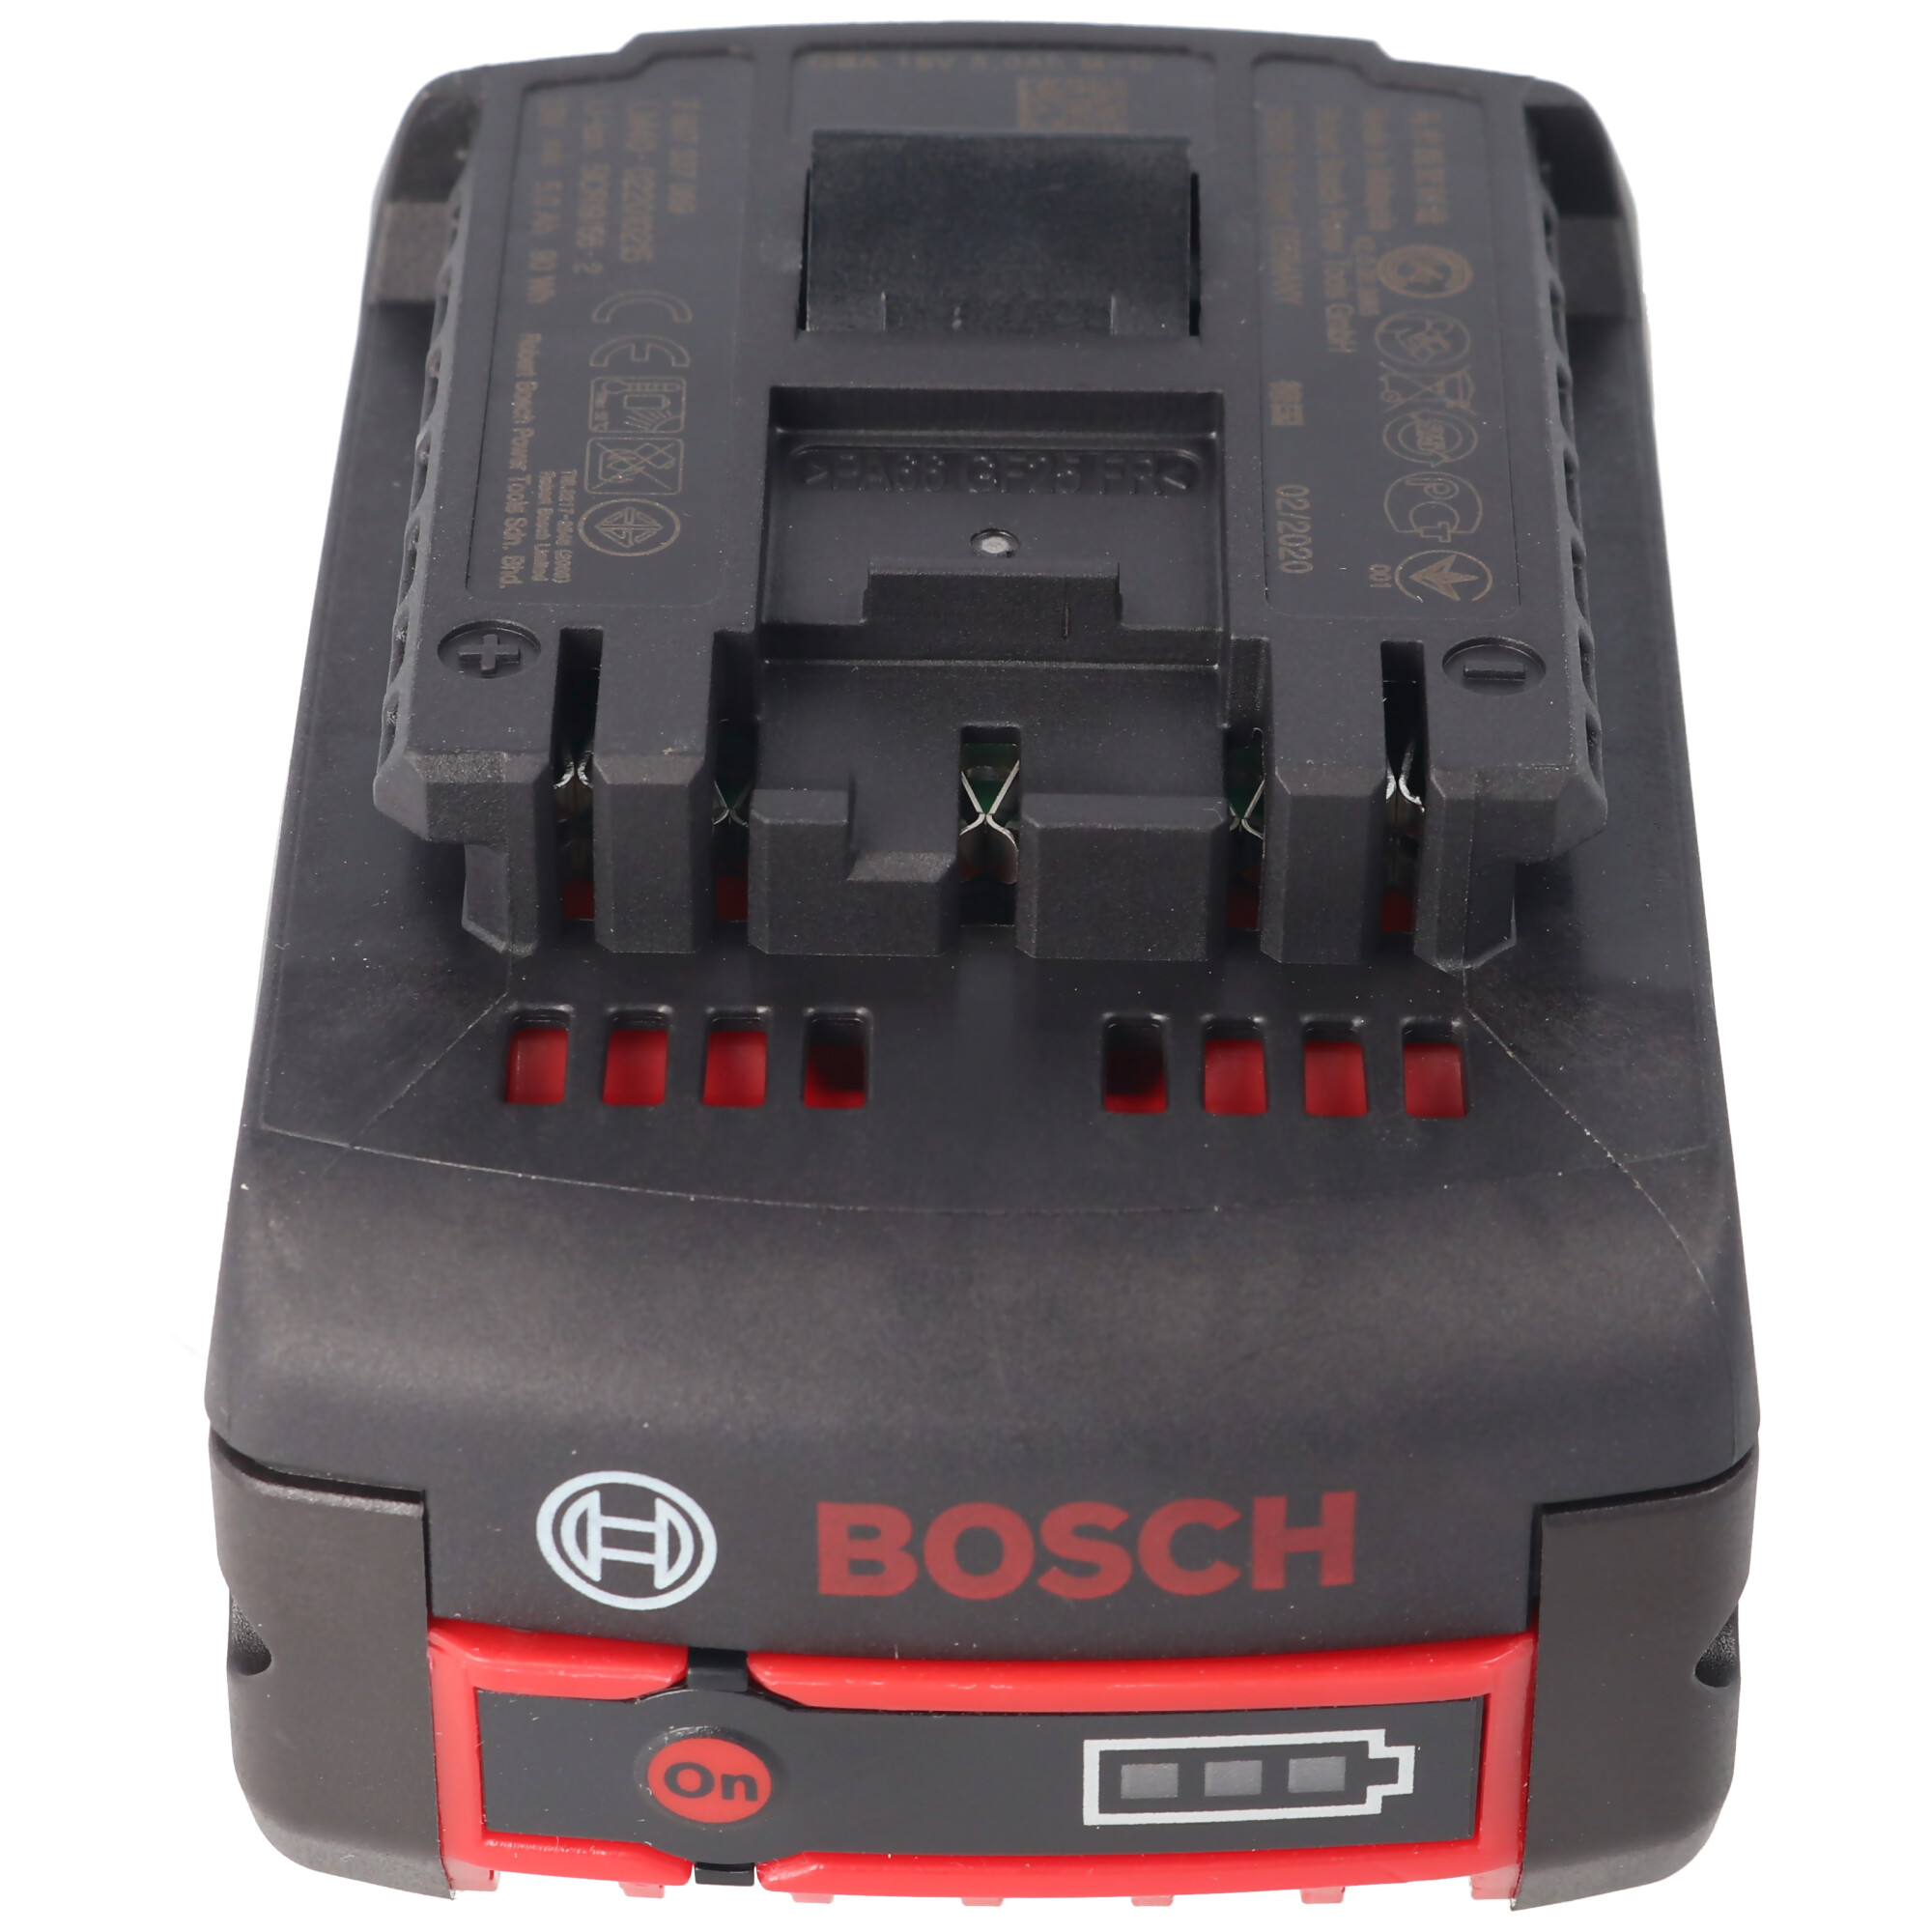 Original Bosch GSR 18 V-LI Akku 2607336815, 2607337263, 1600A004ZN mit 18 Volt und 5000mAh oder 6000mAh, auswählbar